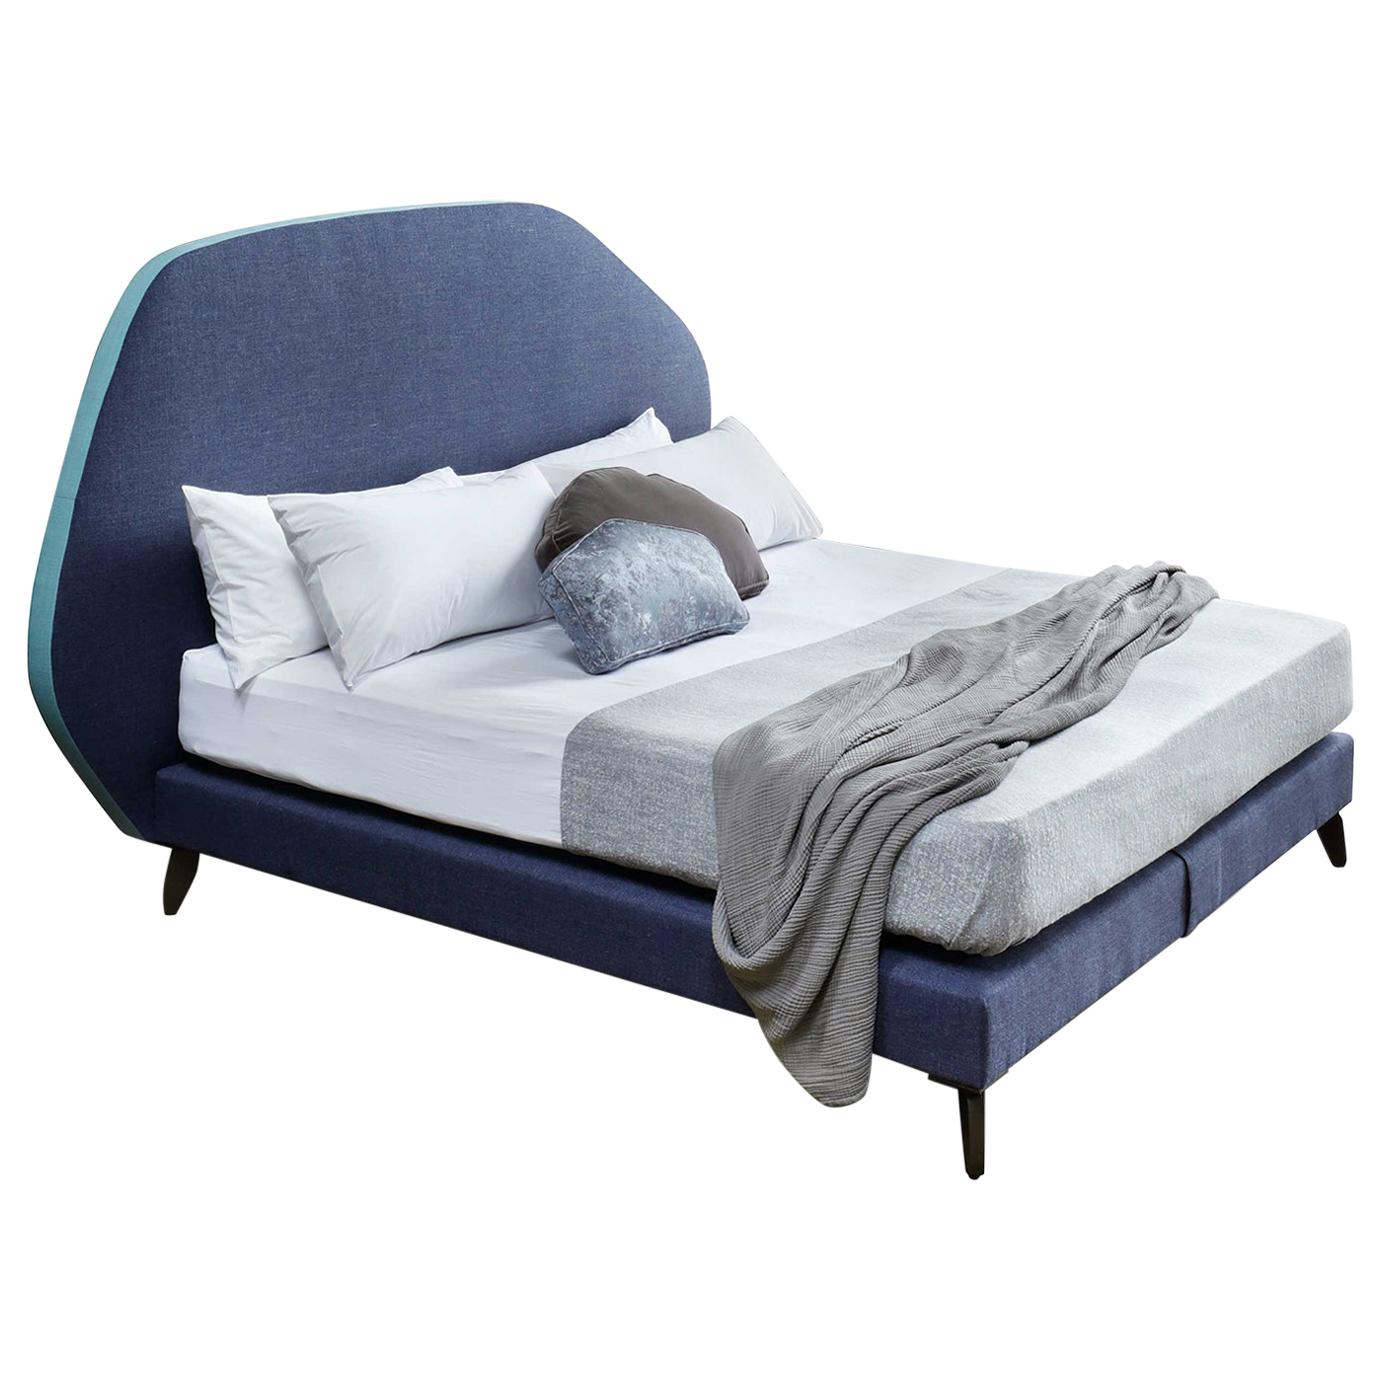 Bespoke Savoir Cloud Headboard & Nº4 Bed Set, California King Size For Sale